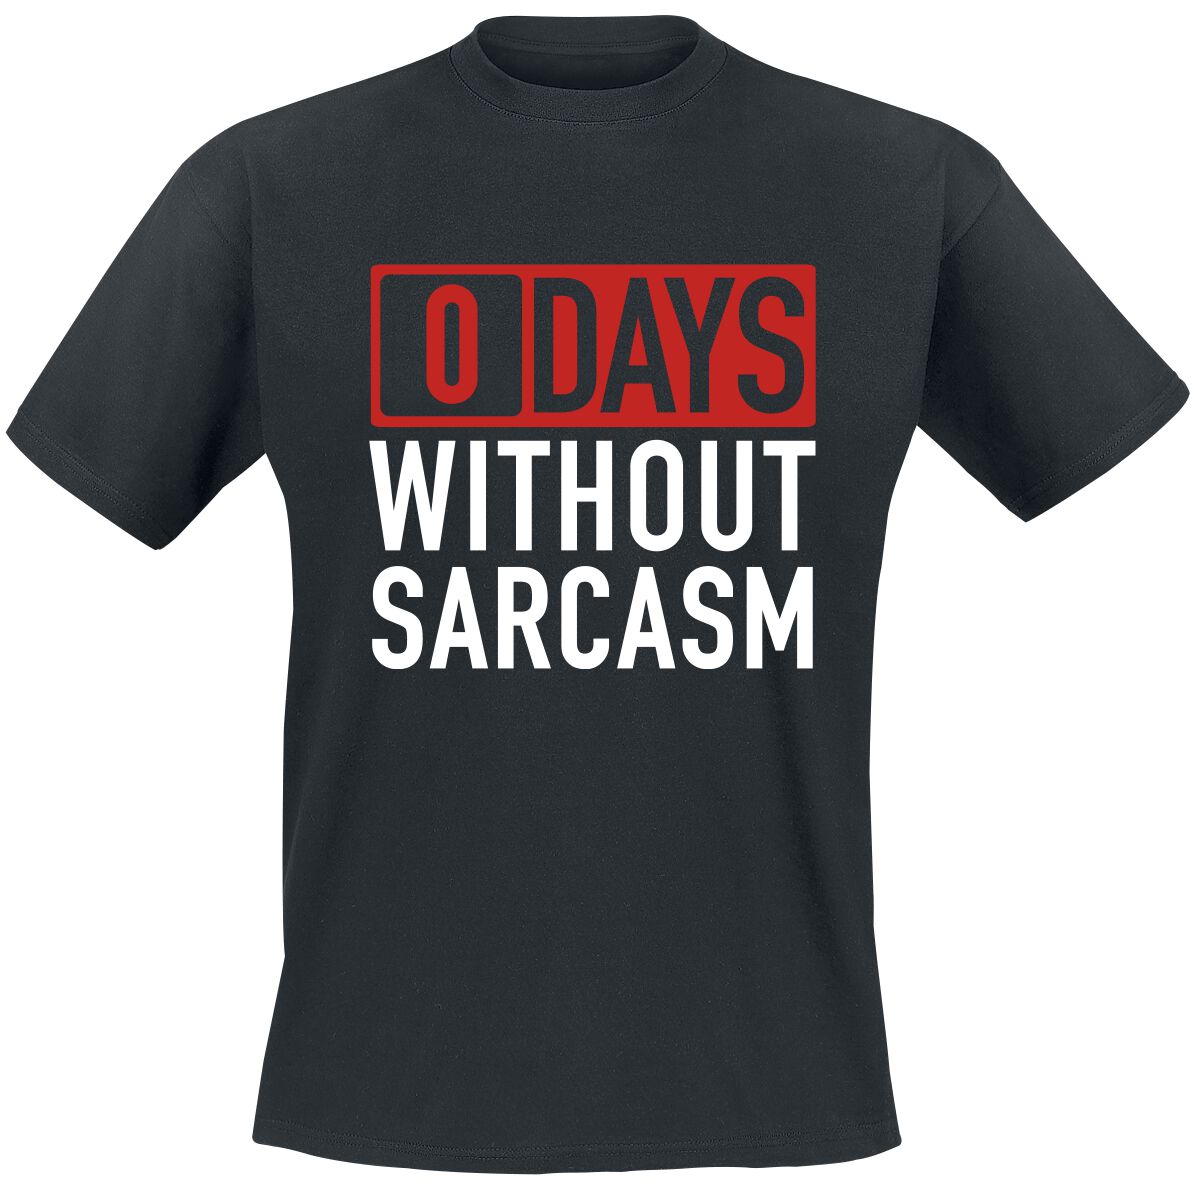 Slogans 0 Days Without Sarcasm T-Shirt black